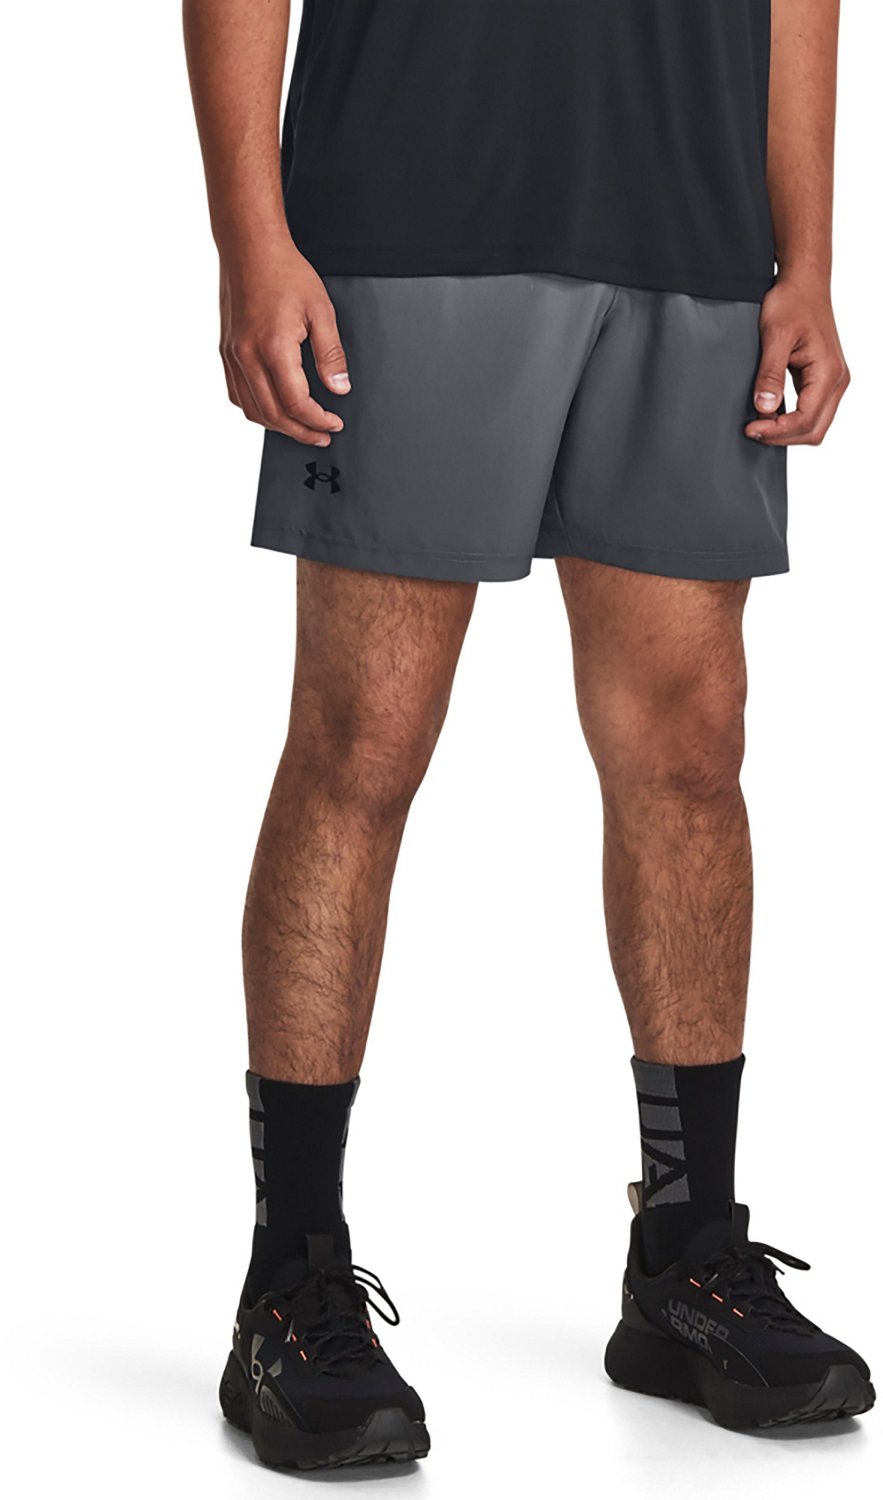 Men's UA Woven 7 Shorts